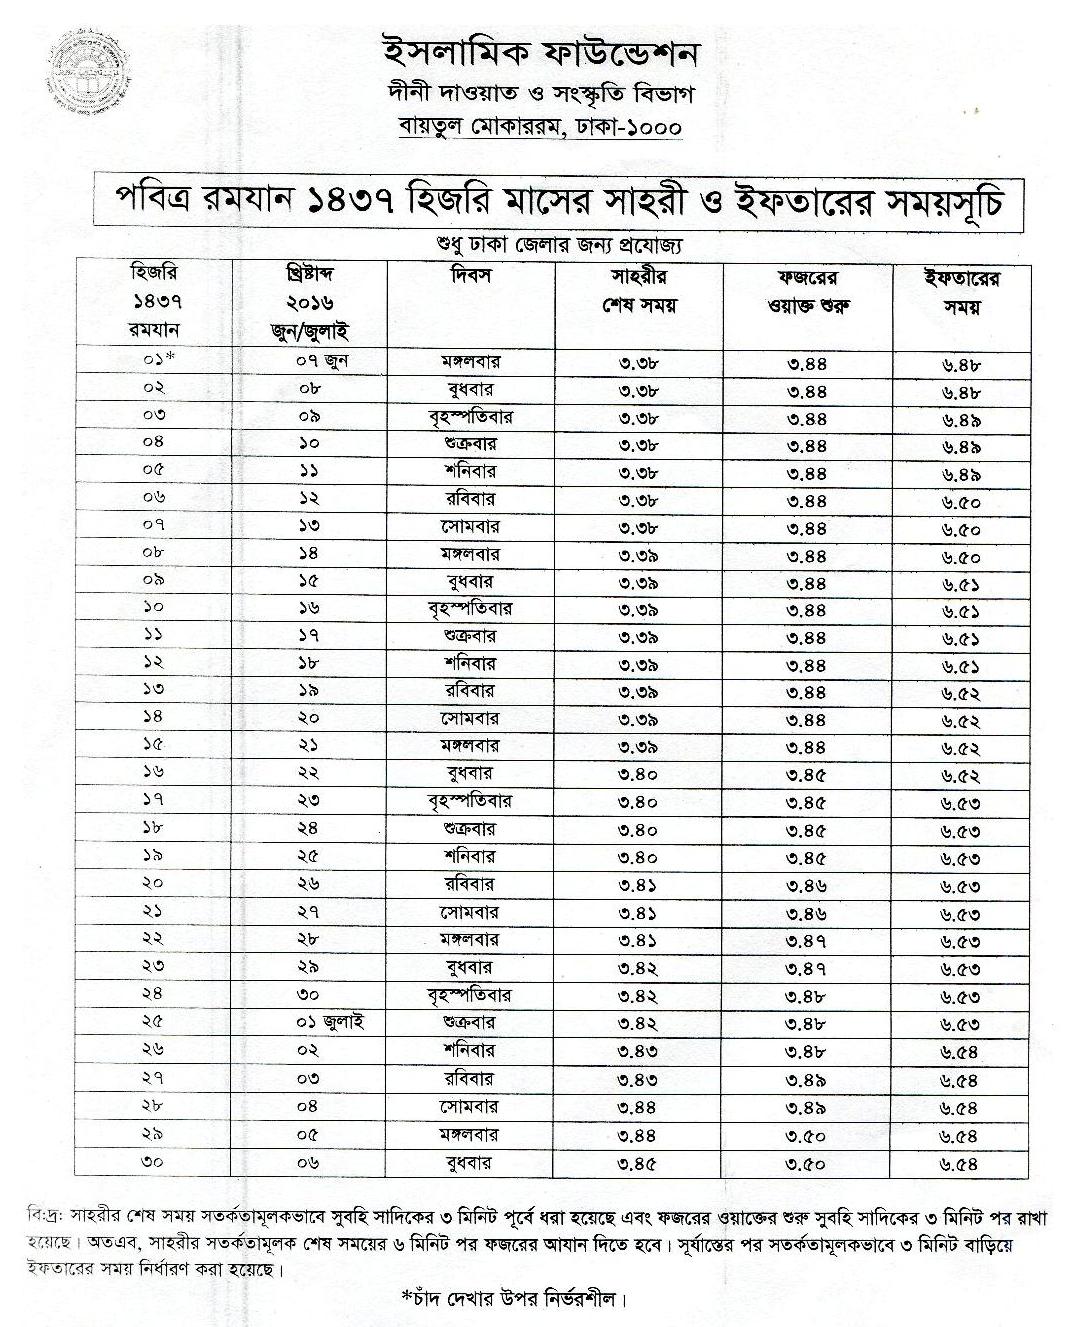 Iftar & Sehri time table in Dhaka, Bangladesh Islamic Life Path